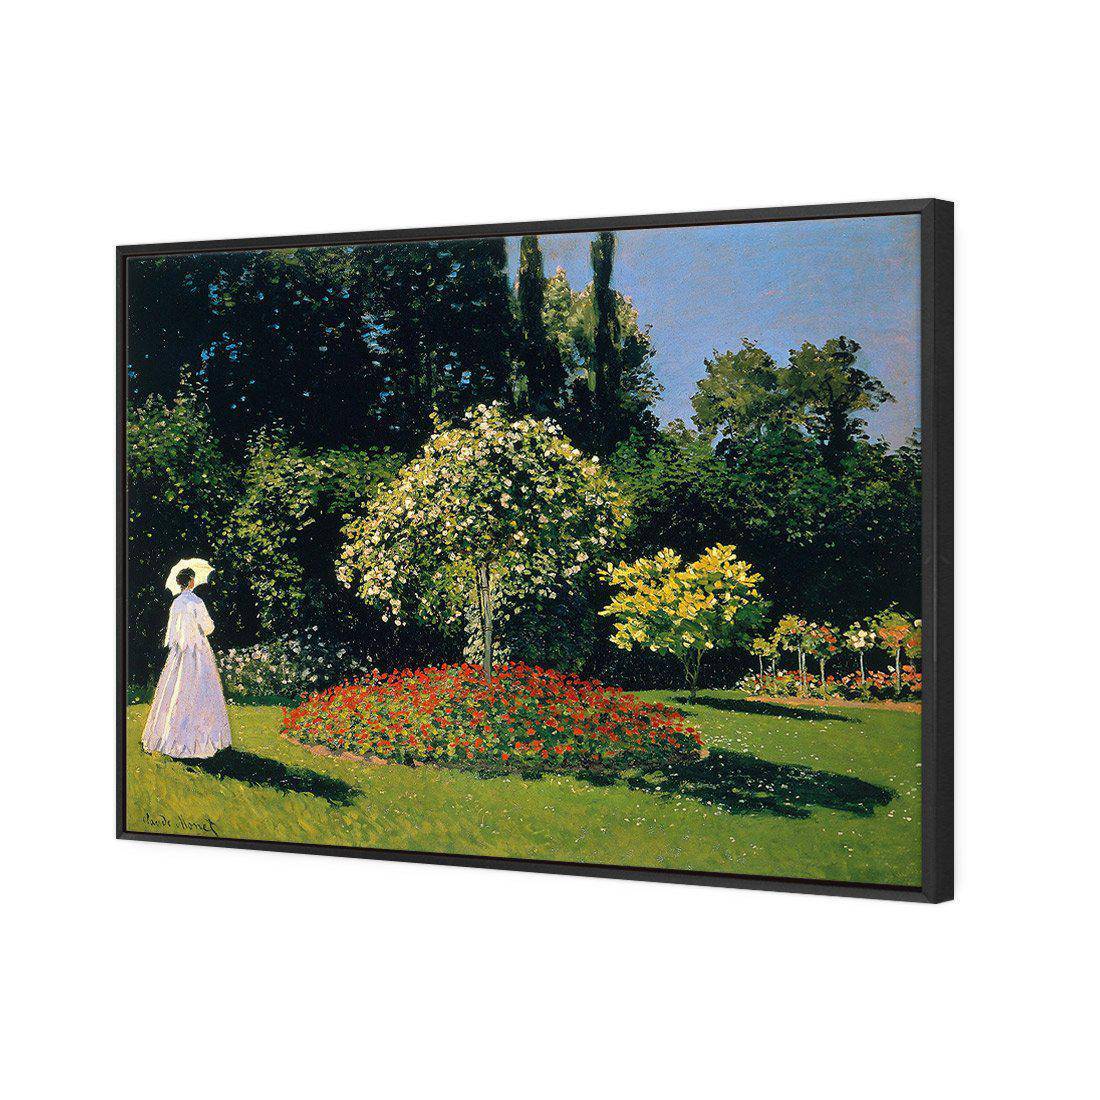 Woman In A Garden - Monet Canvas Art-Canvas-Wall Art Designs-45x30cm-Canvas - Black Frame-Wall Art Designs